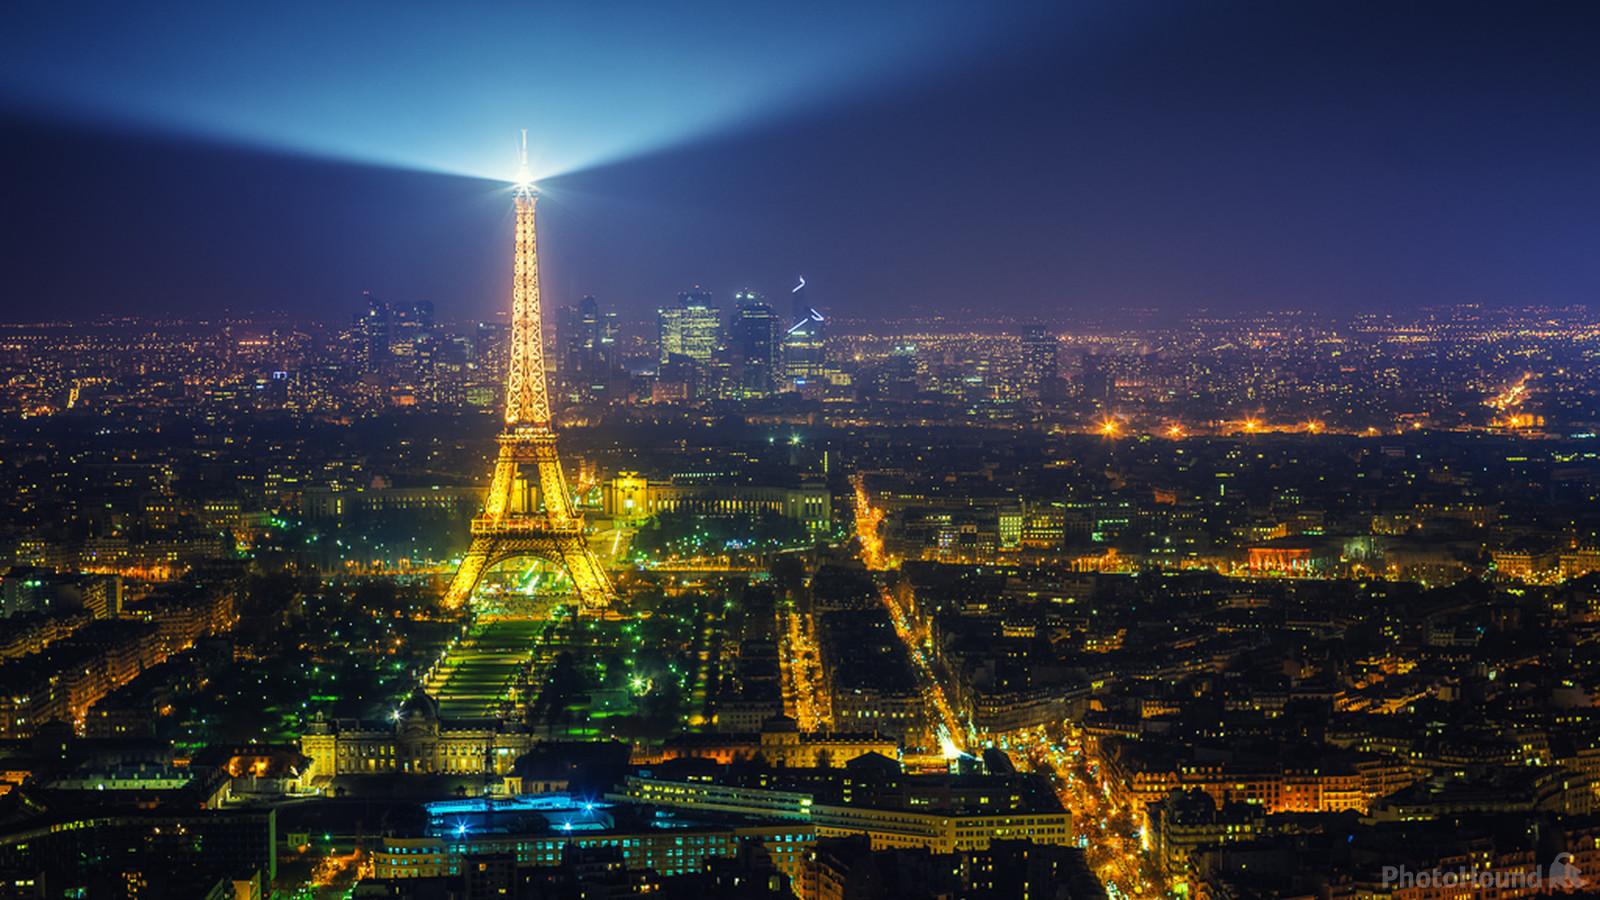 Image of Tour Montparnasse by James Billings.